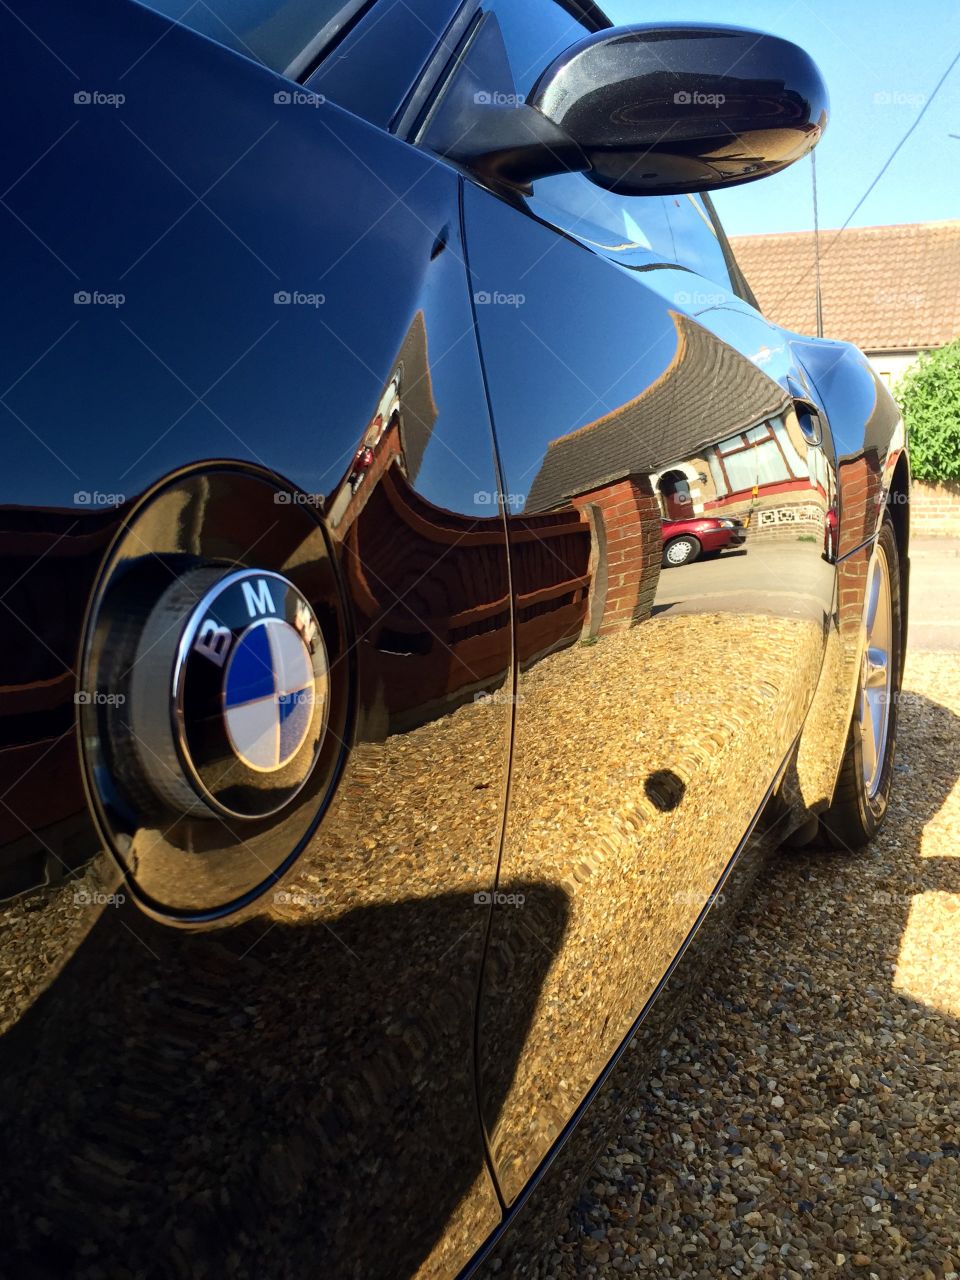 Black BMW Z4 Polished. Freshly polished black BMW Z4 convertible on sunmers day.